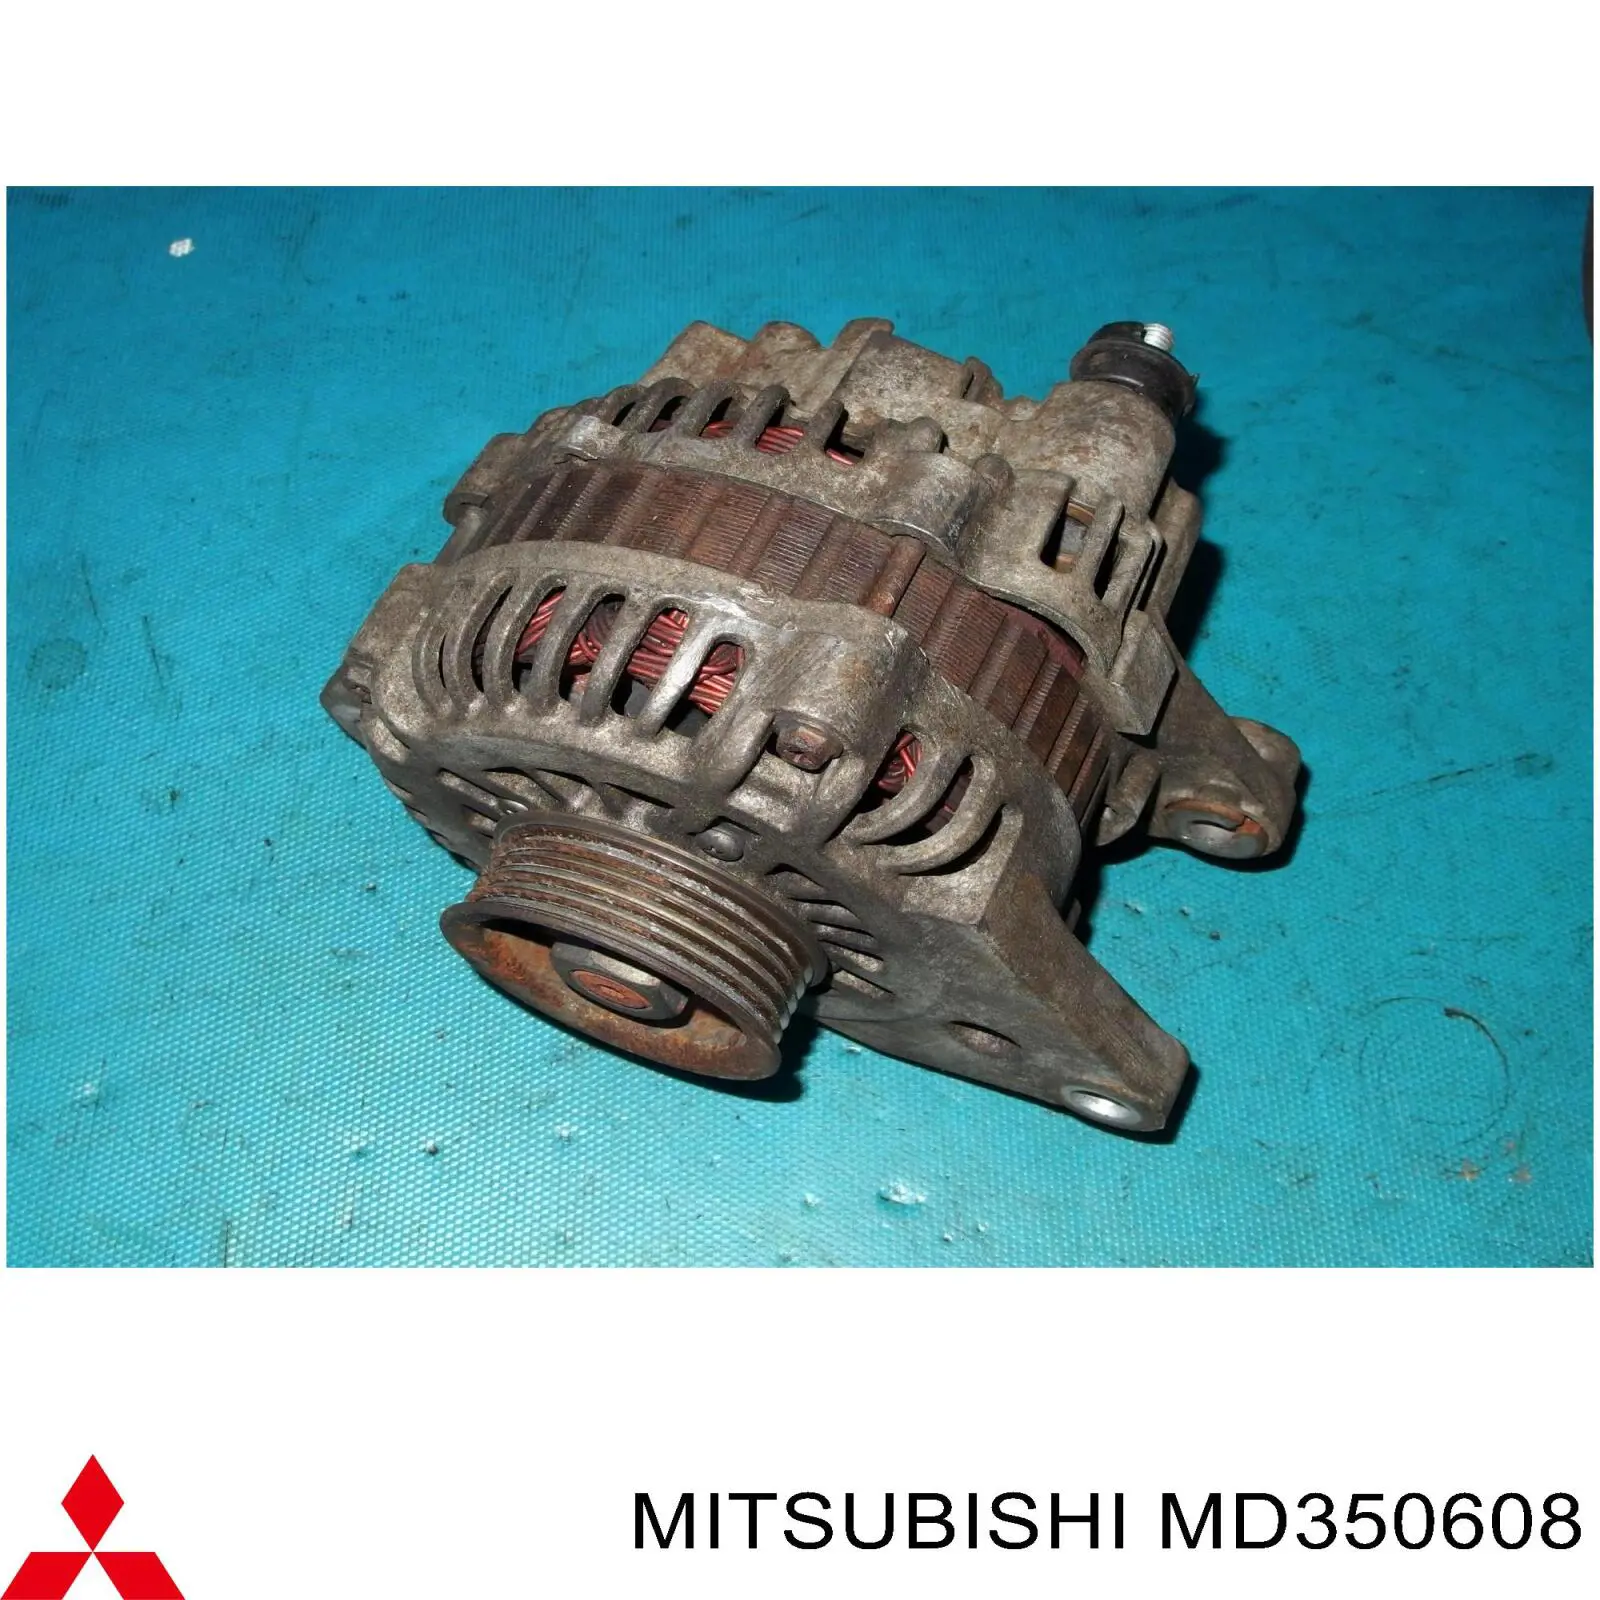 MD350608 Mitsubishi gerador